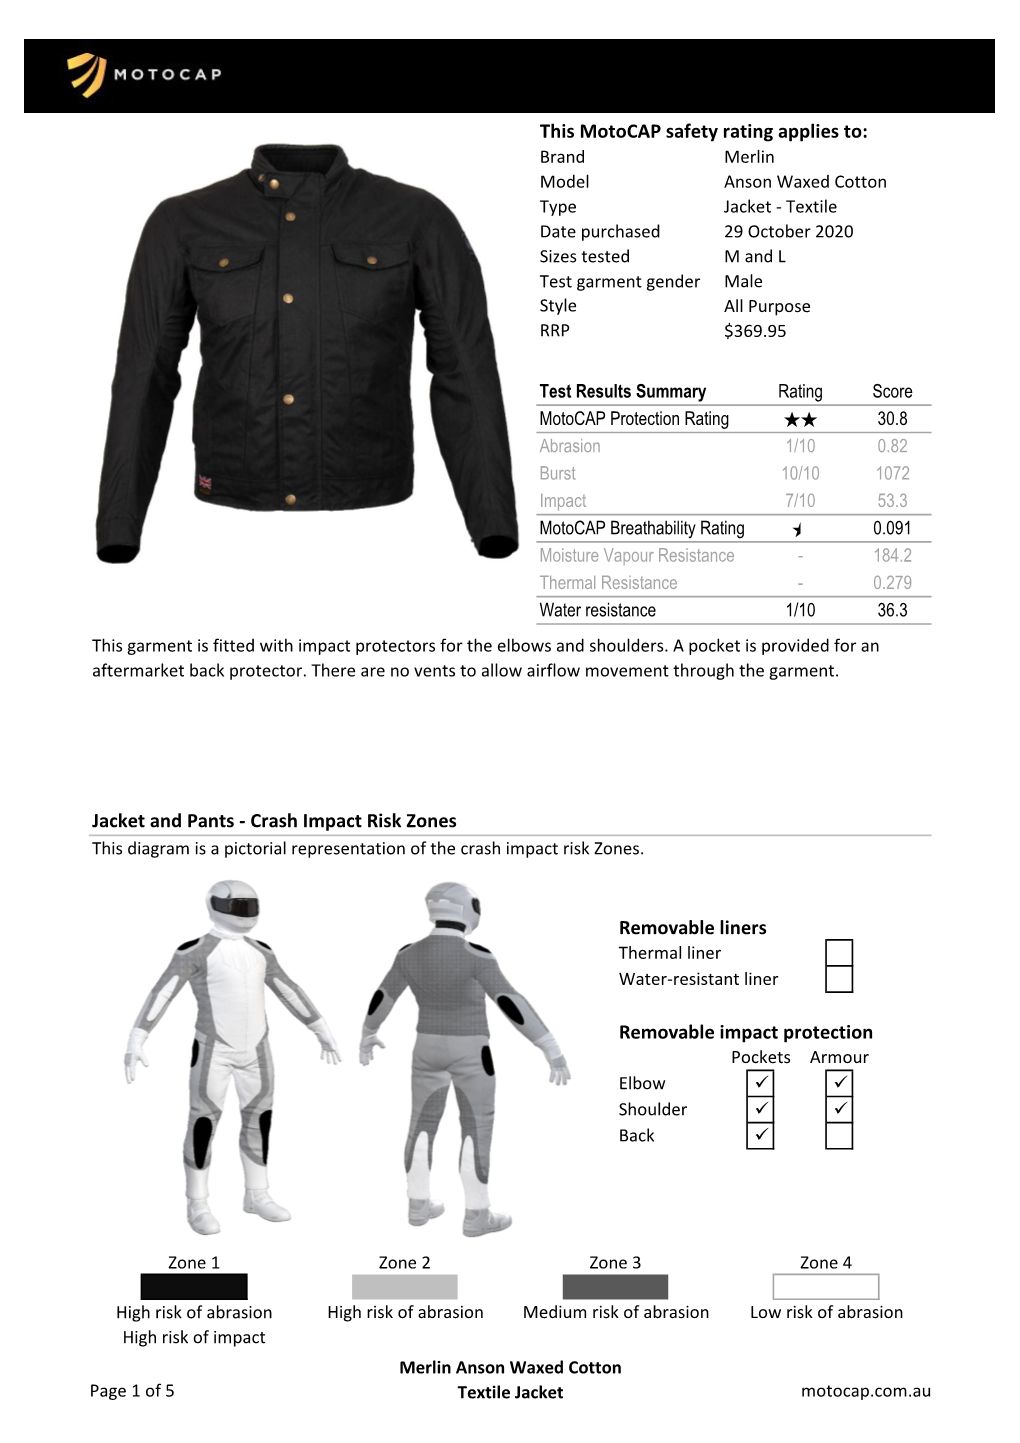 J20T02 Merlin Anson Waxed Cotton Textile Jacket